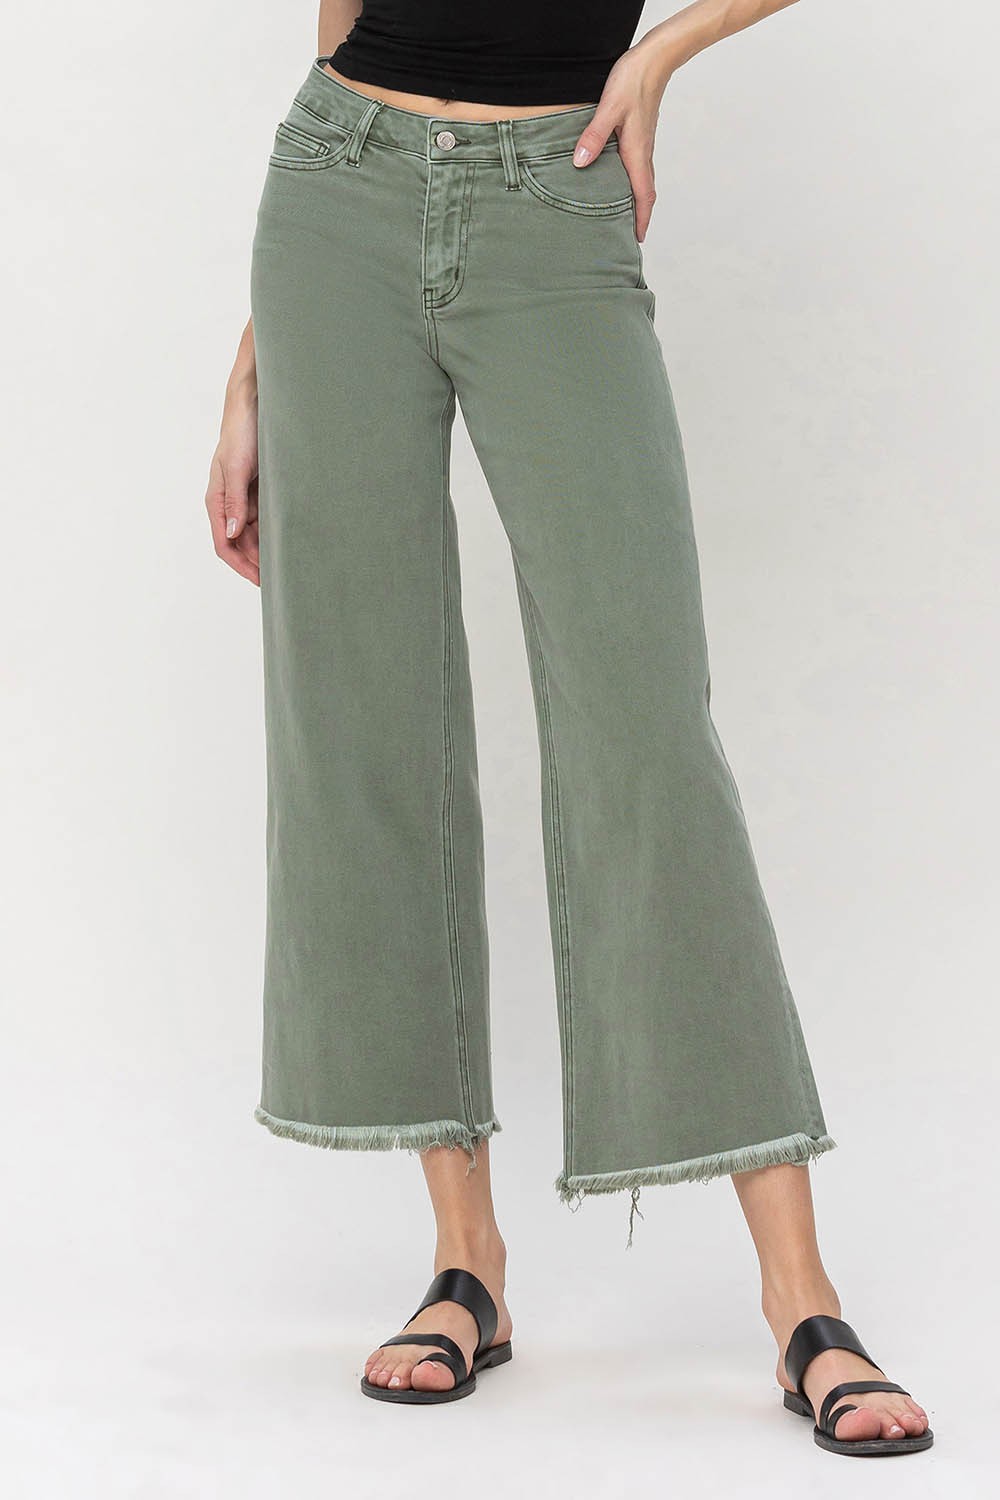 "Livi" Green Wide Leg High Rise Jeans